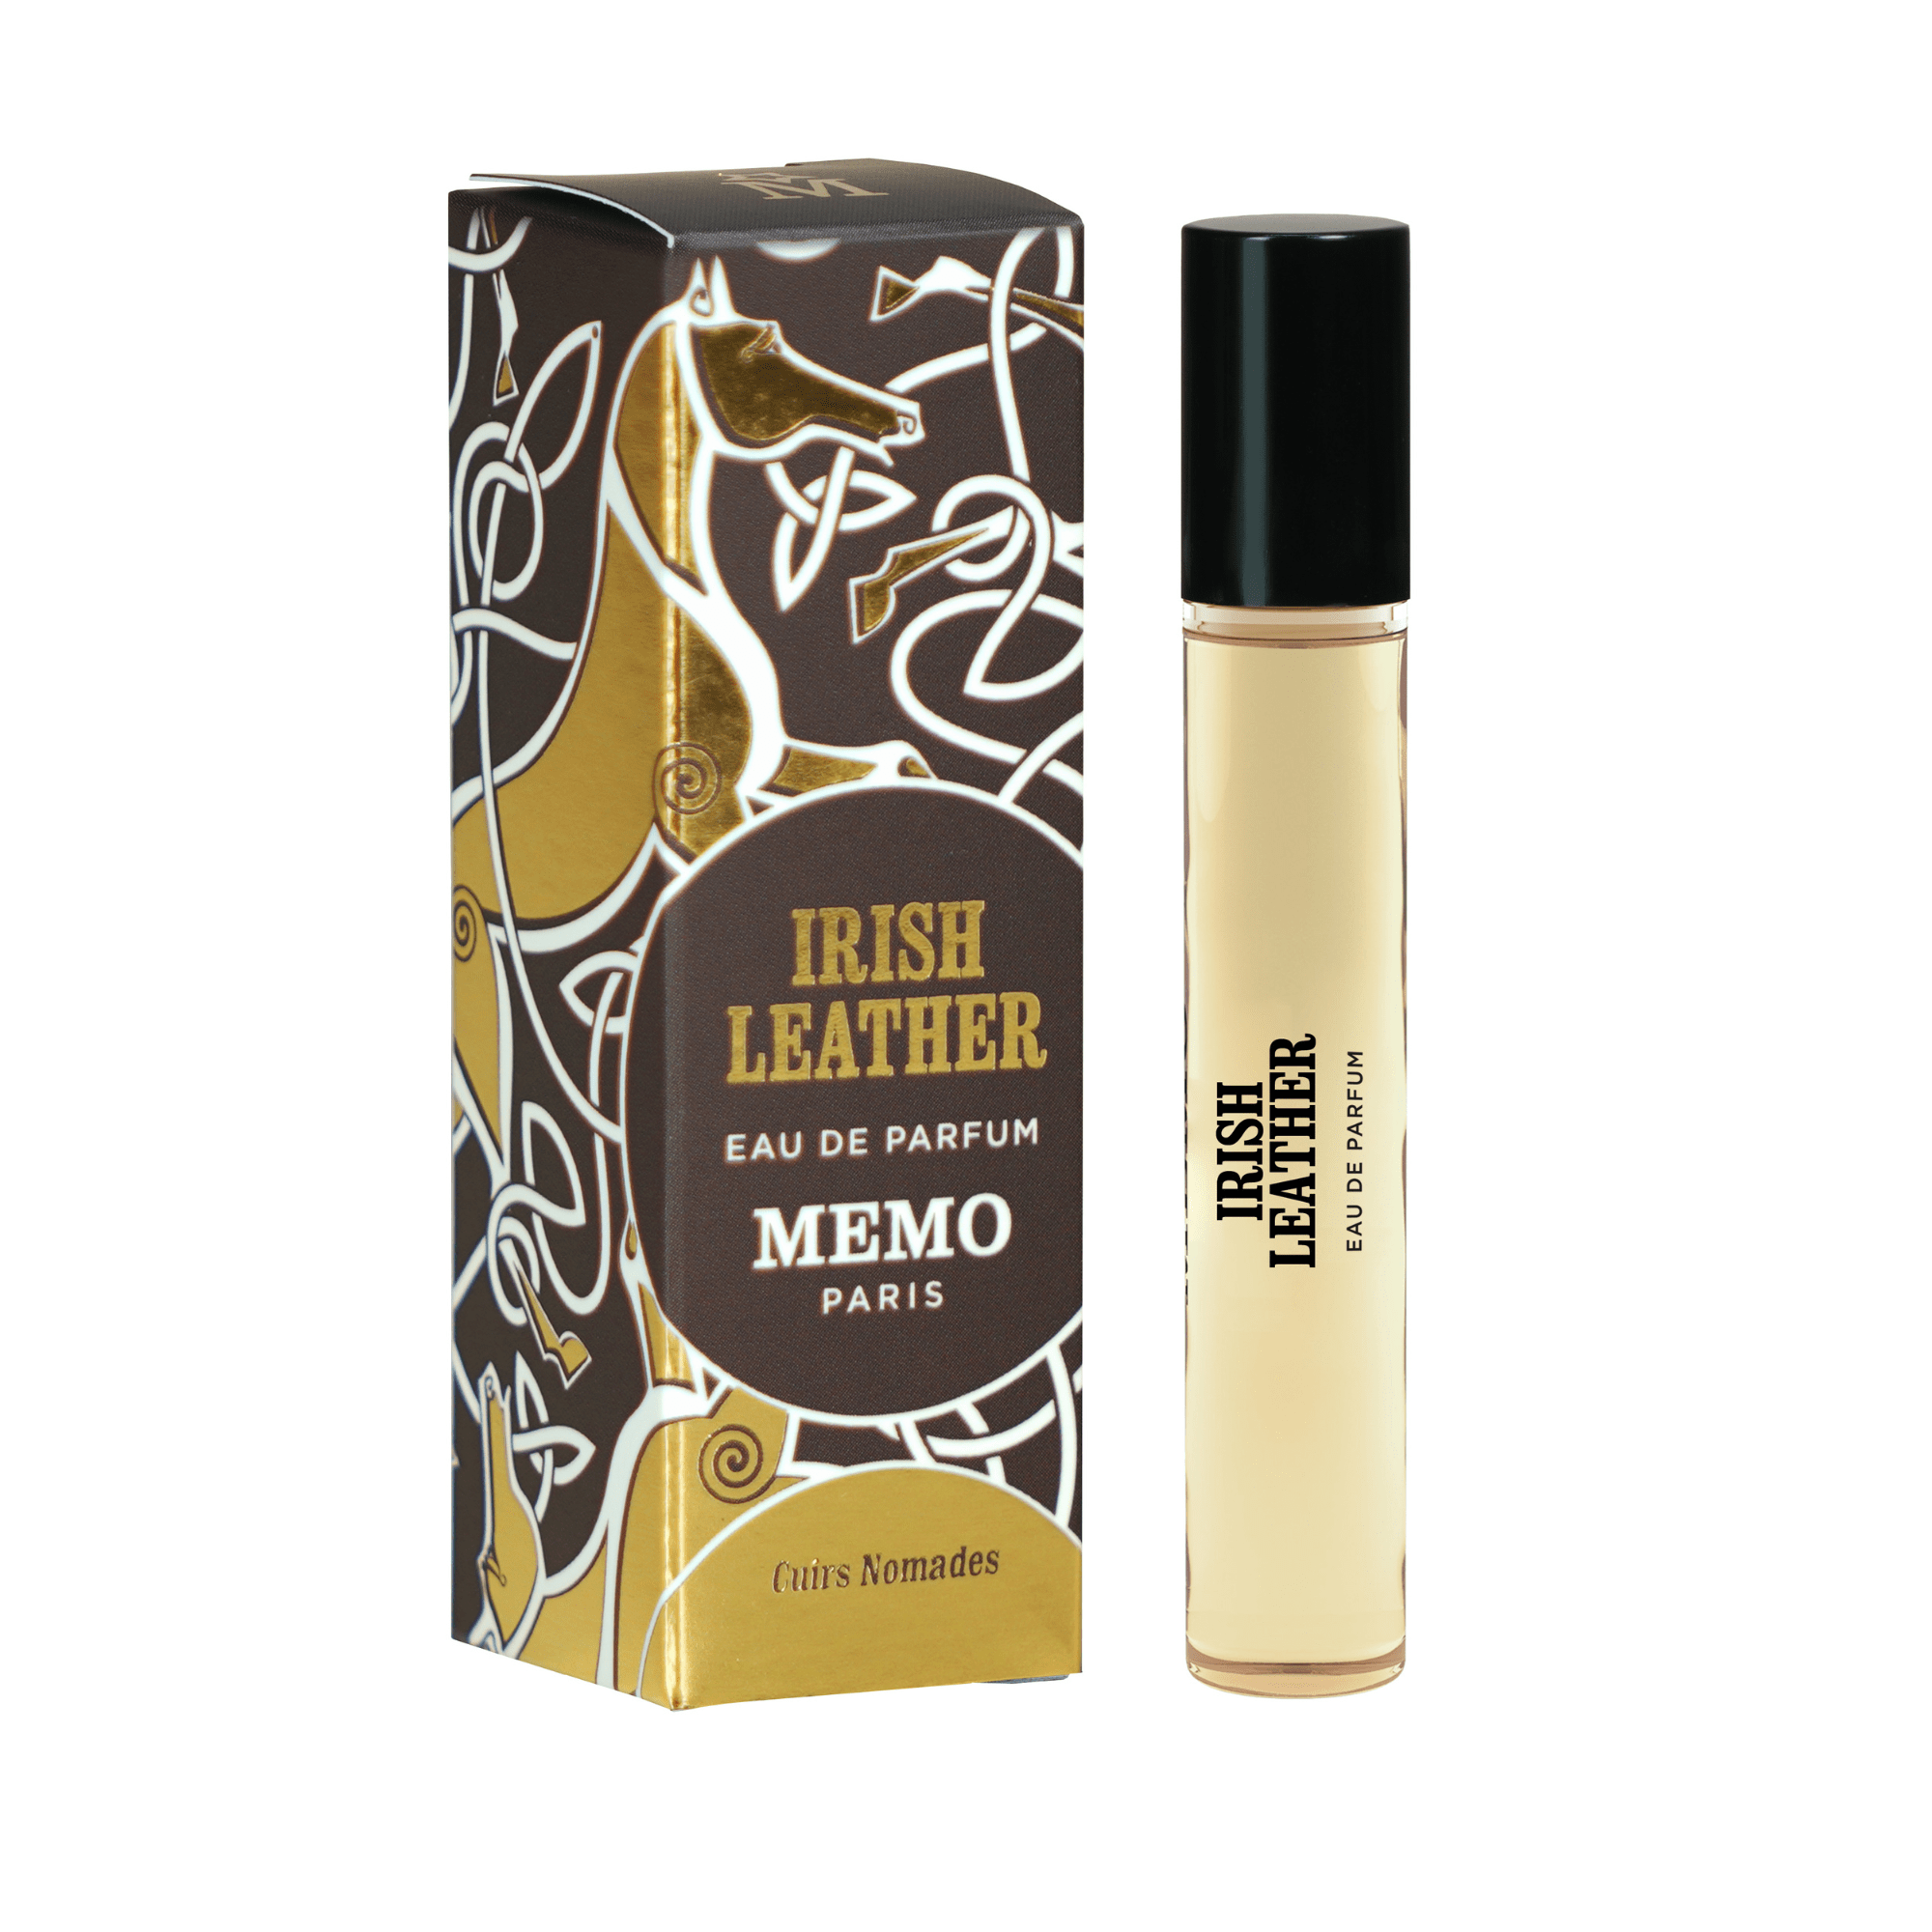 Irish Leather Travel Perfume by Memo Paris